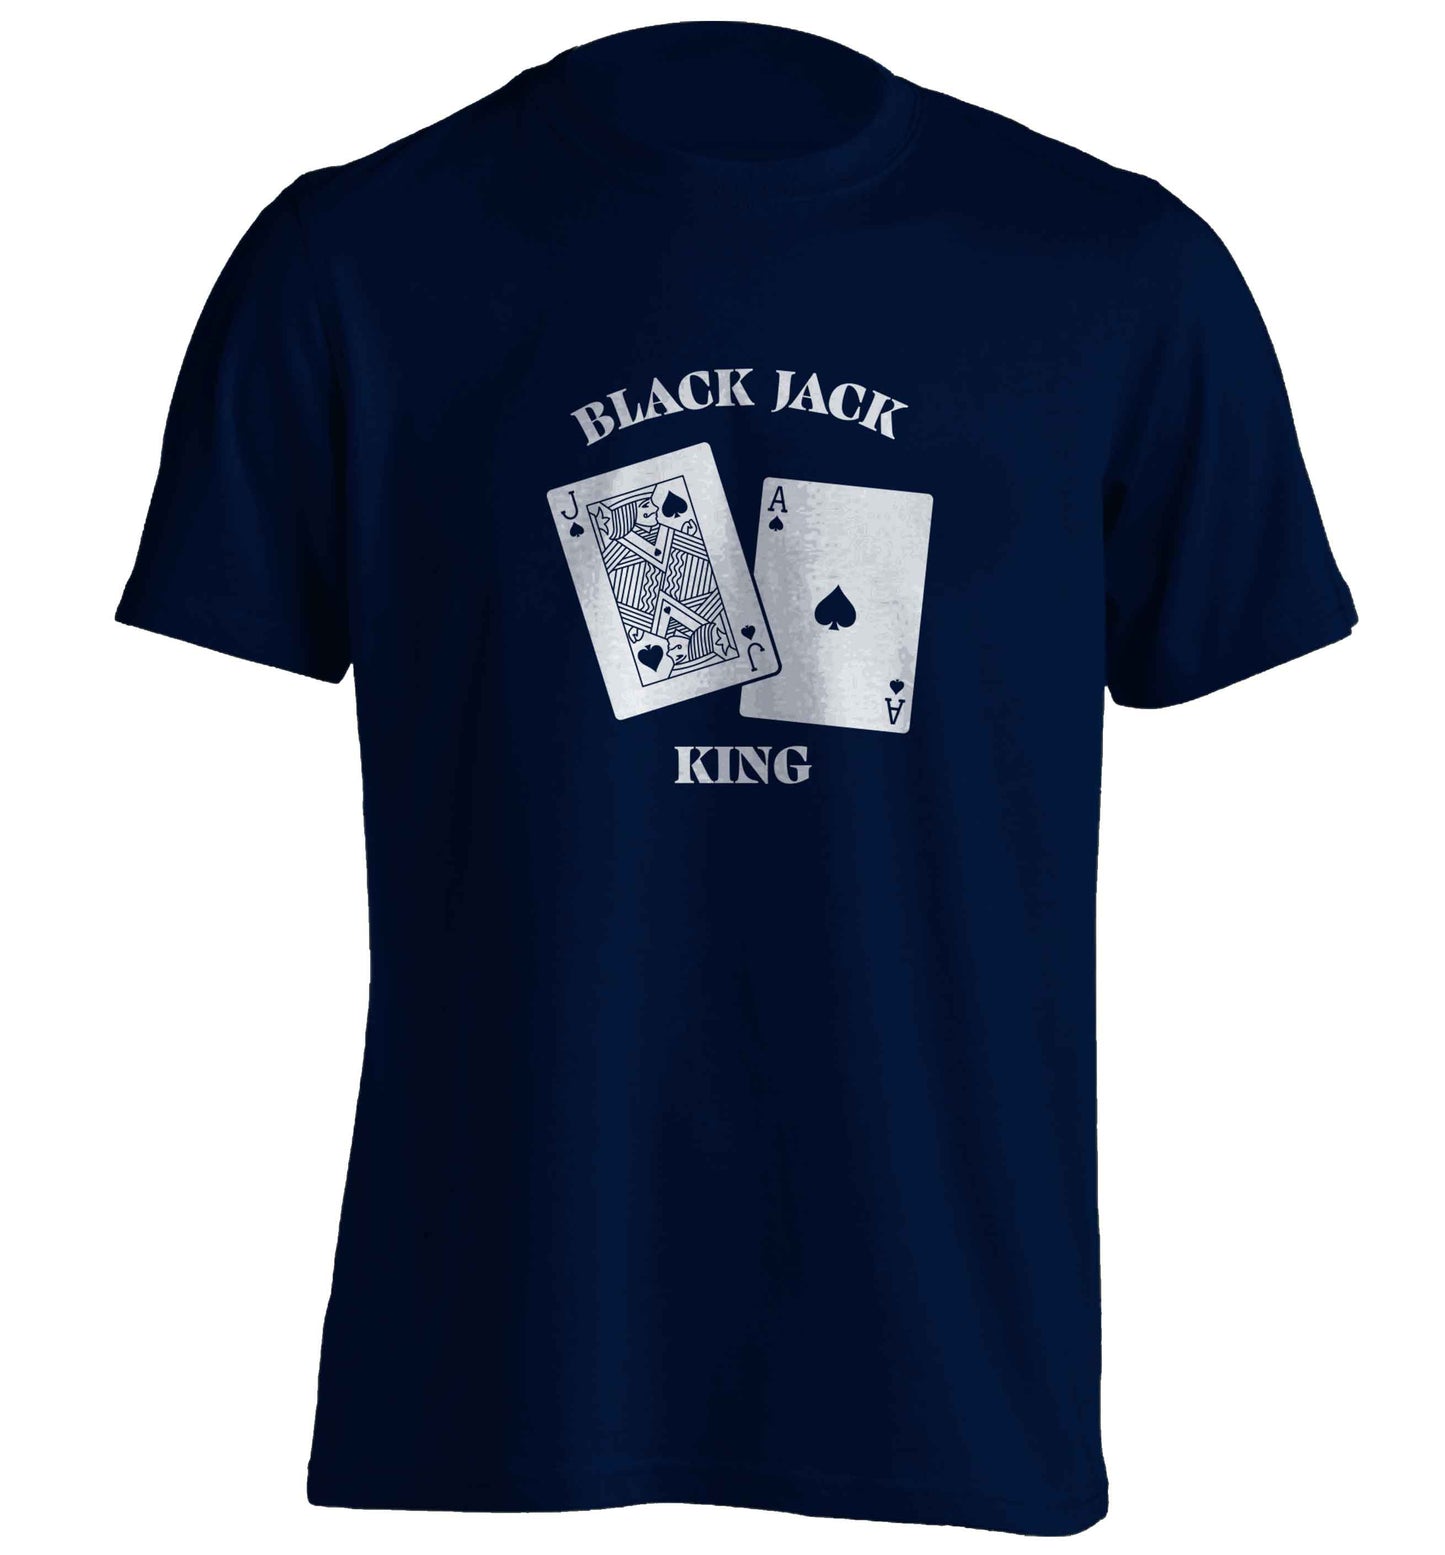 Blackjack king adults unisex navy Tshirt 2XL